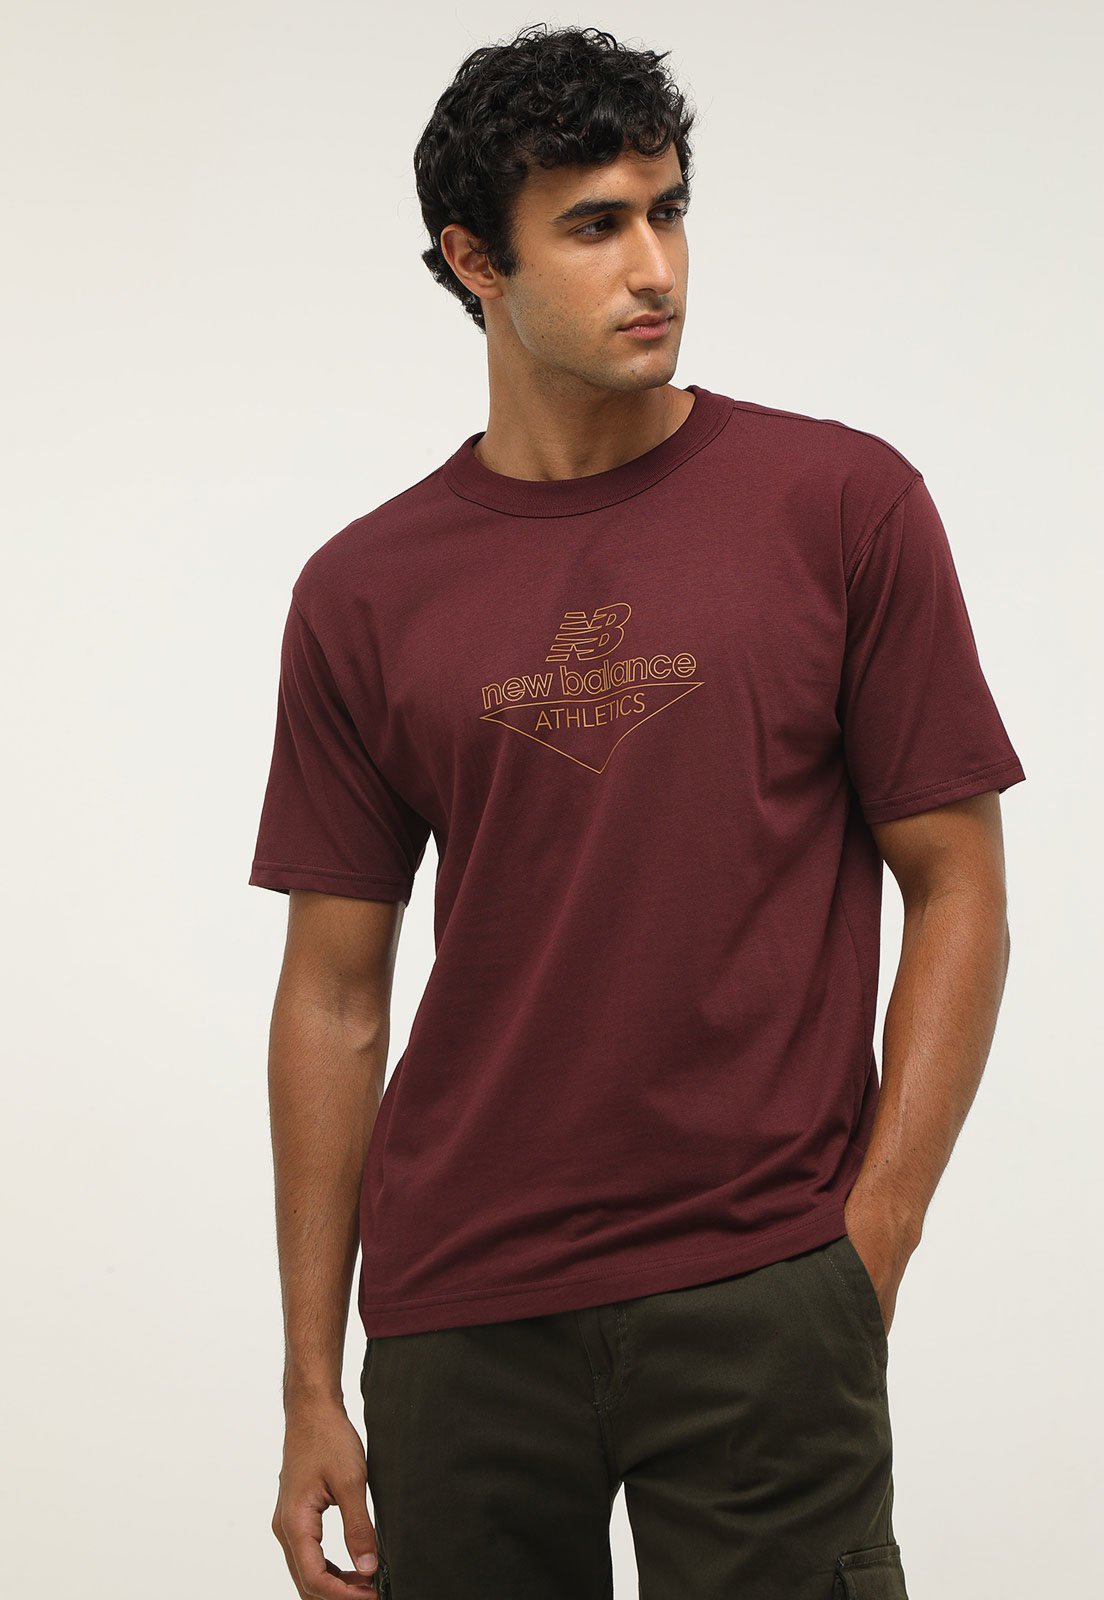 Camiseta New Balance Athletics Vinho